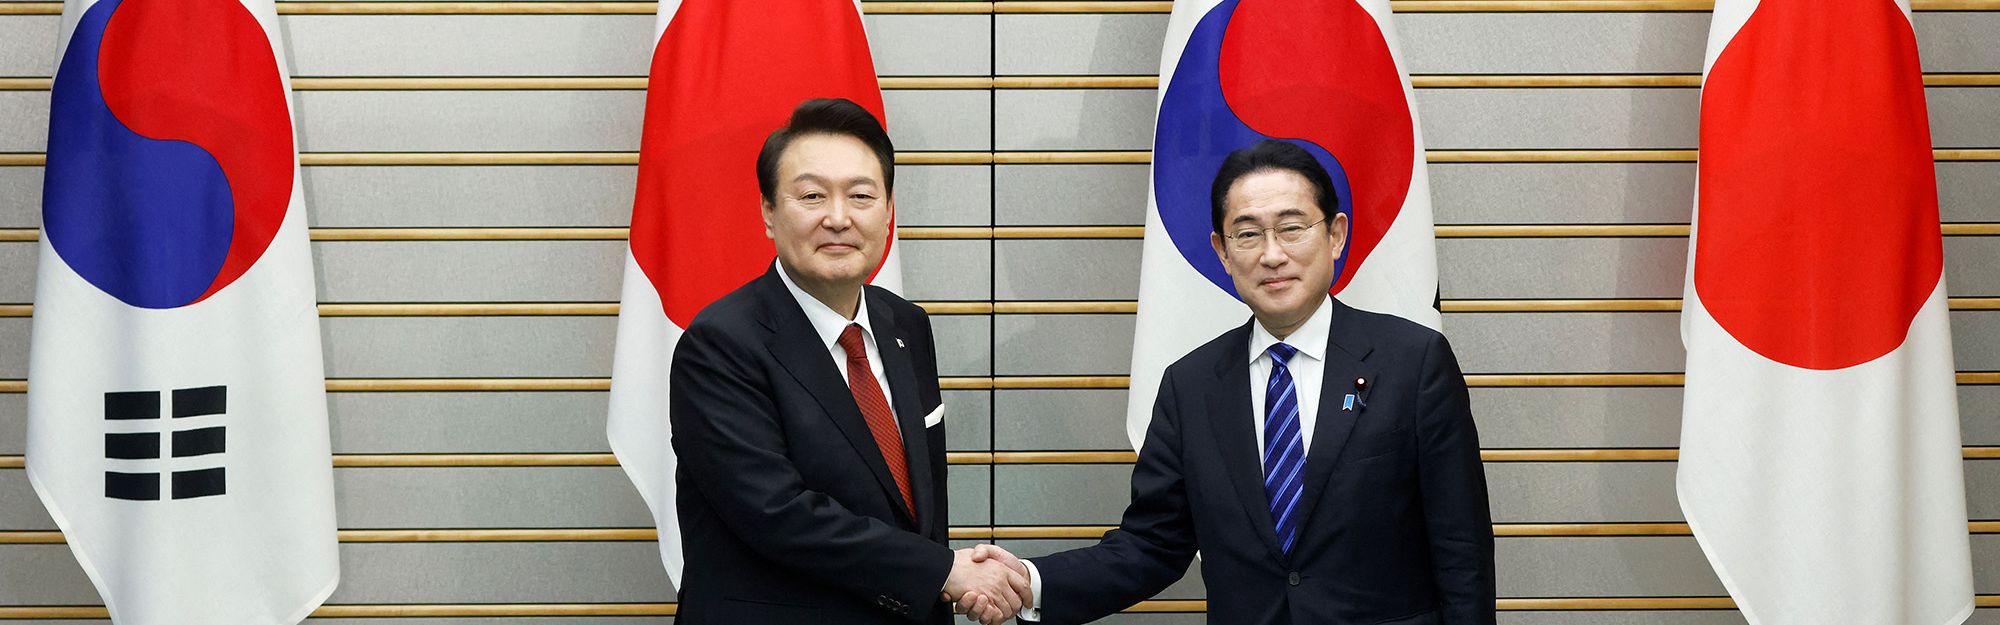 9 Sal Ke Bachi Ka Jabar Dasti Xxx Video - Japan and South Korea agree to mend ties as leaders meet following years of  dispute | CNN